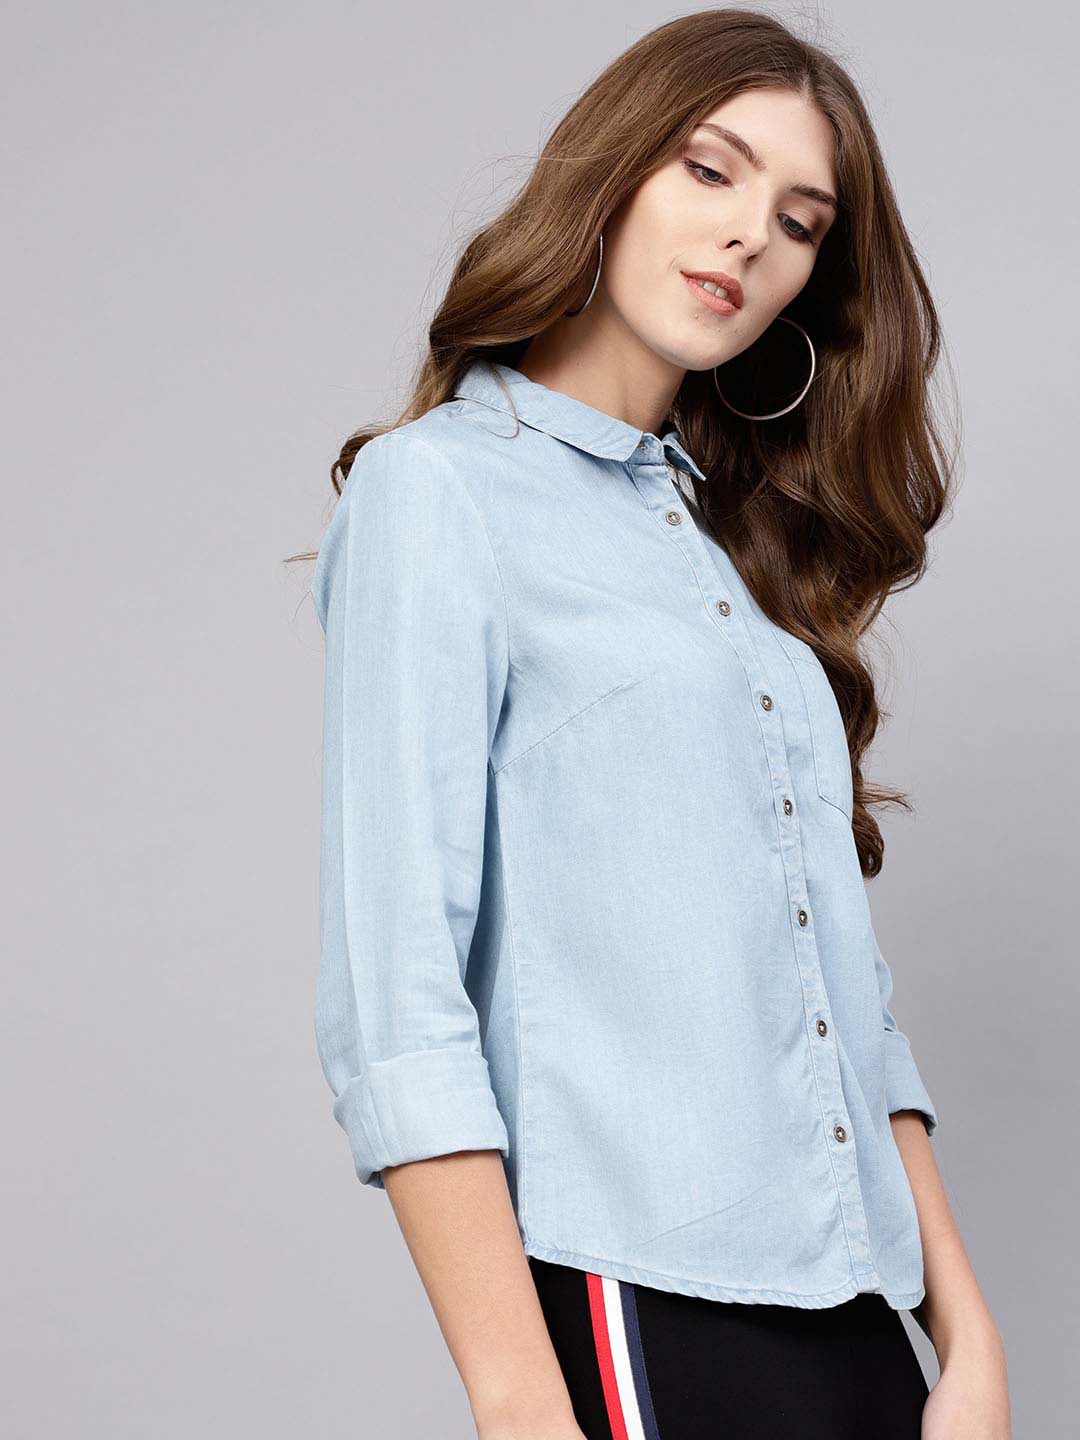 Aggregate more than 210 light blue denim shirt womens latest